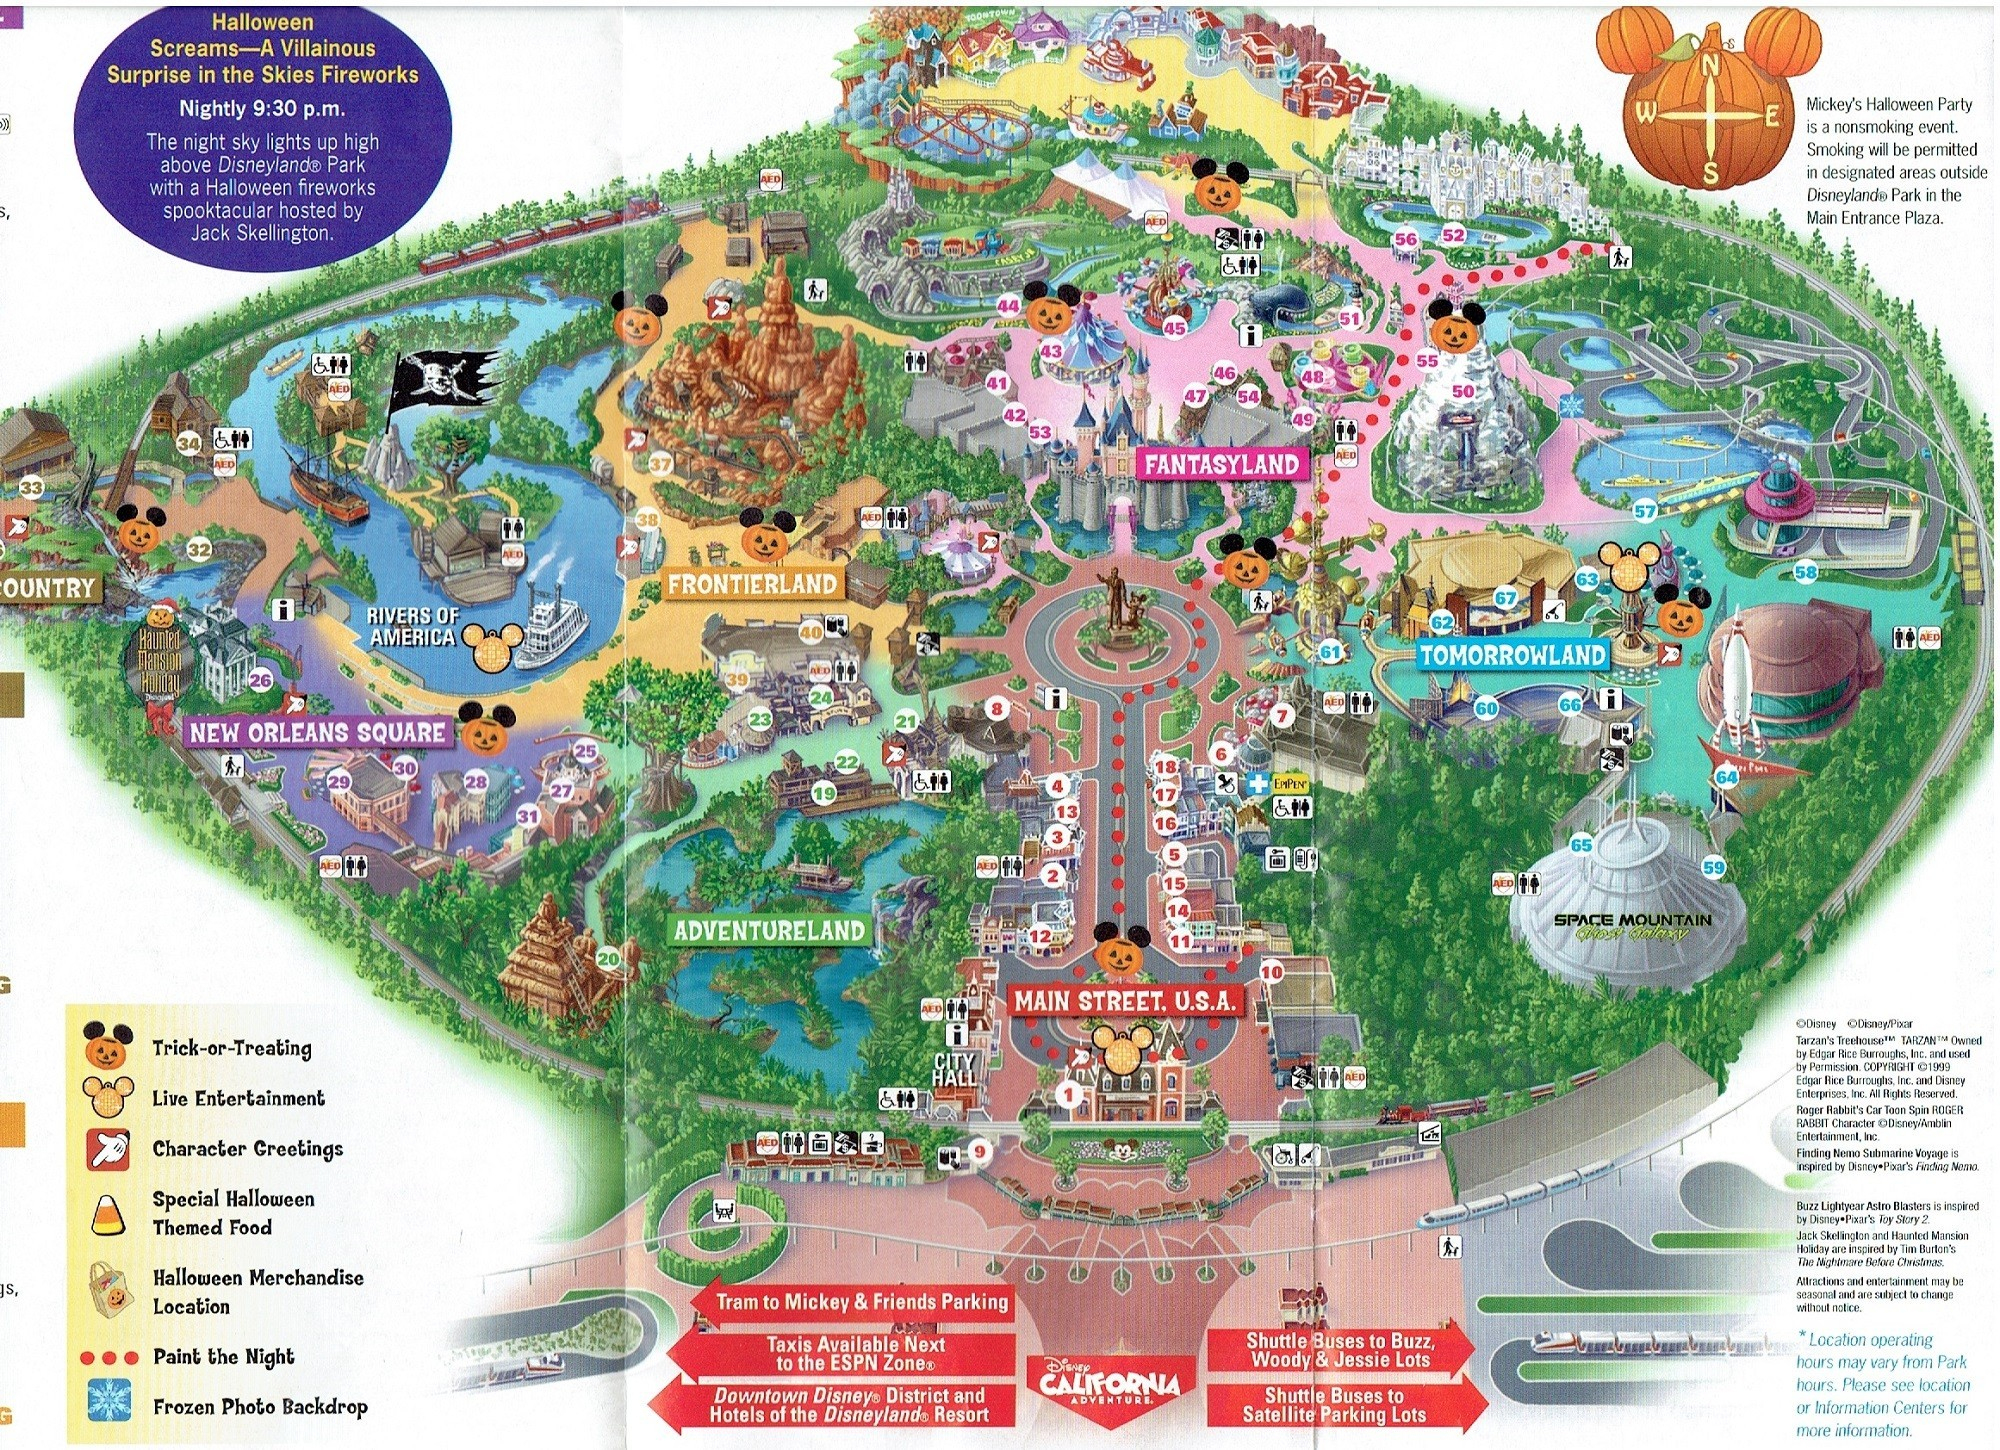 Disney World Florida Map - Mobilacomanda - Disney World Florida Map